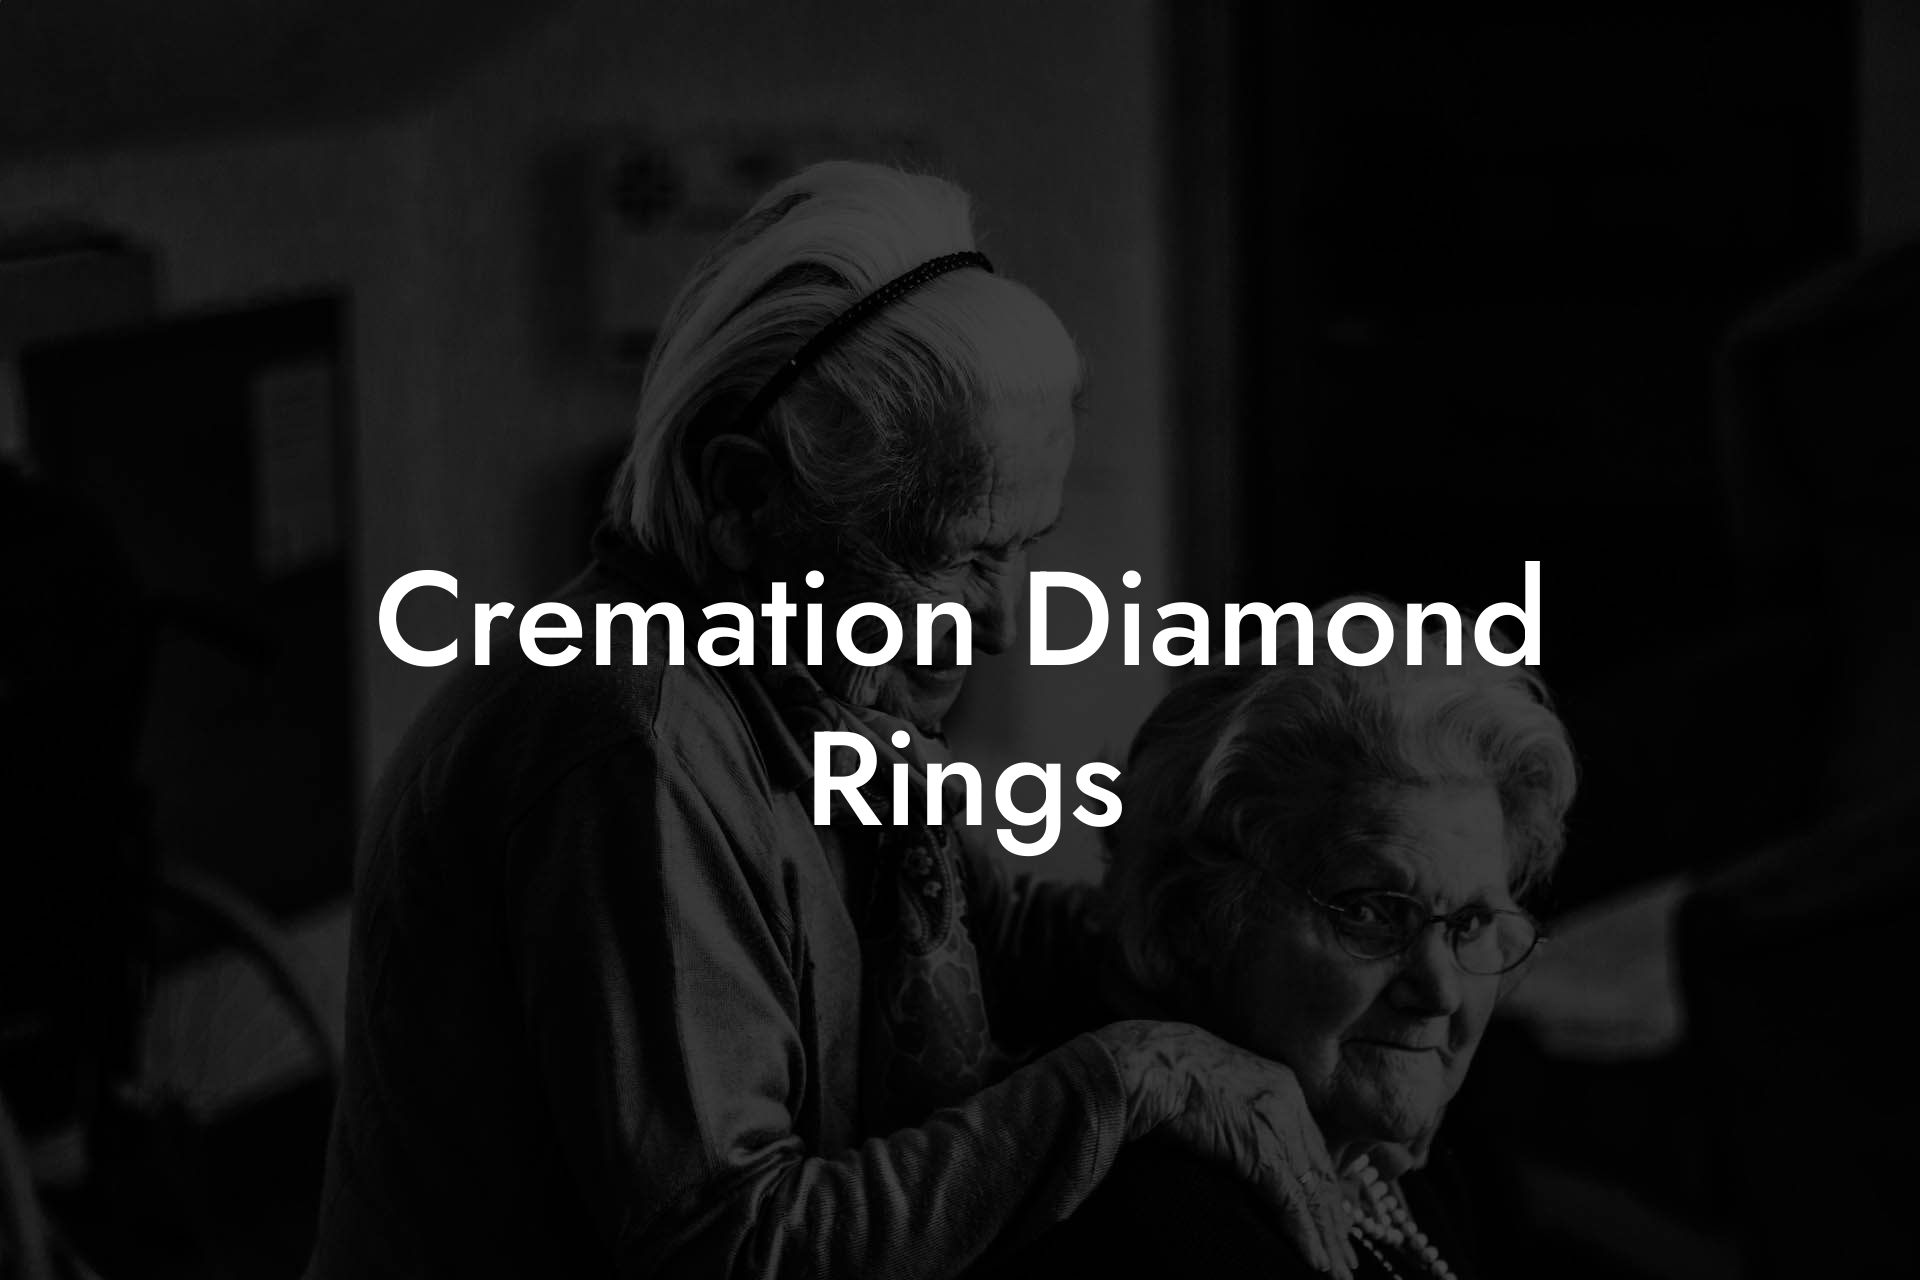 Cremation Diamond Rings